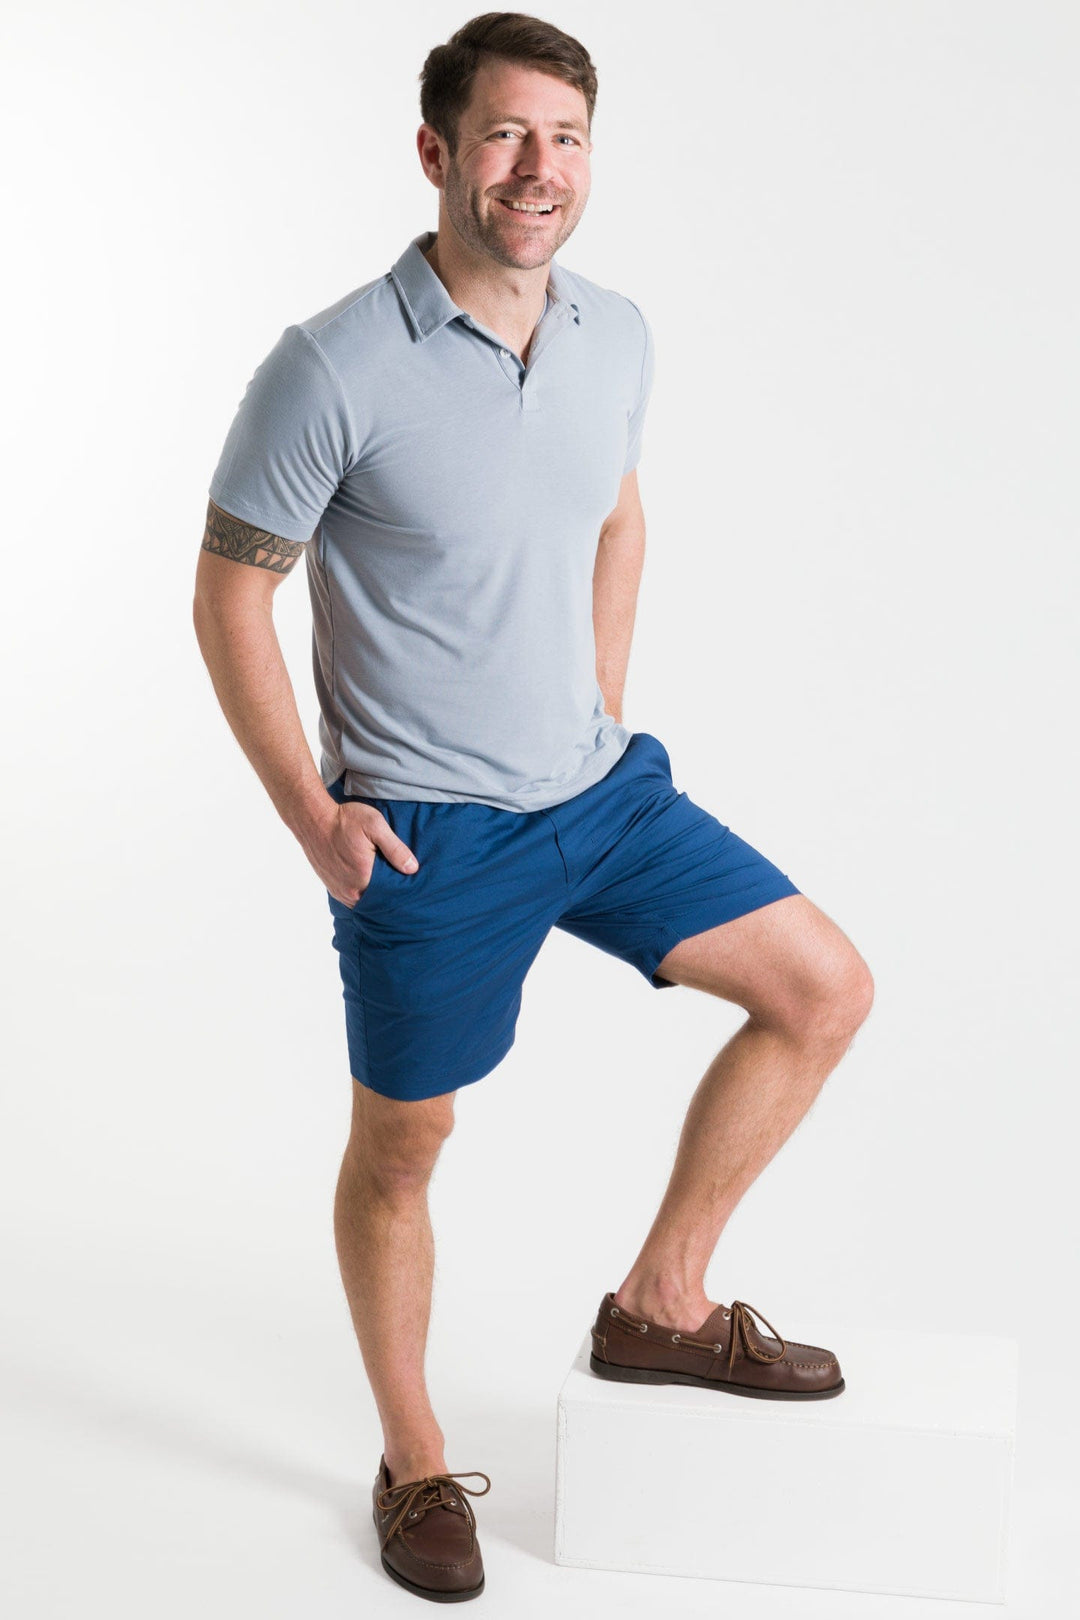 Buy Bright Navy Walking Shorts for Short Men | Ash & Erie   Walking Shorts